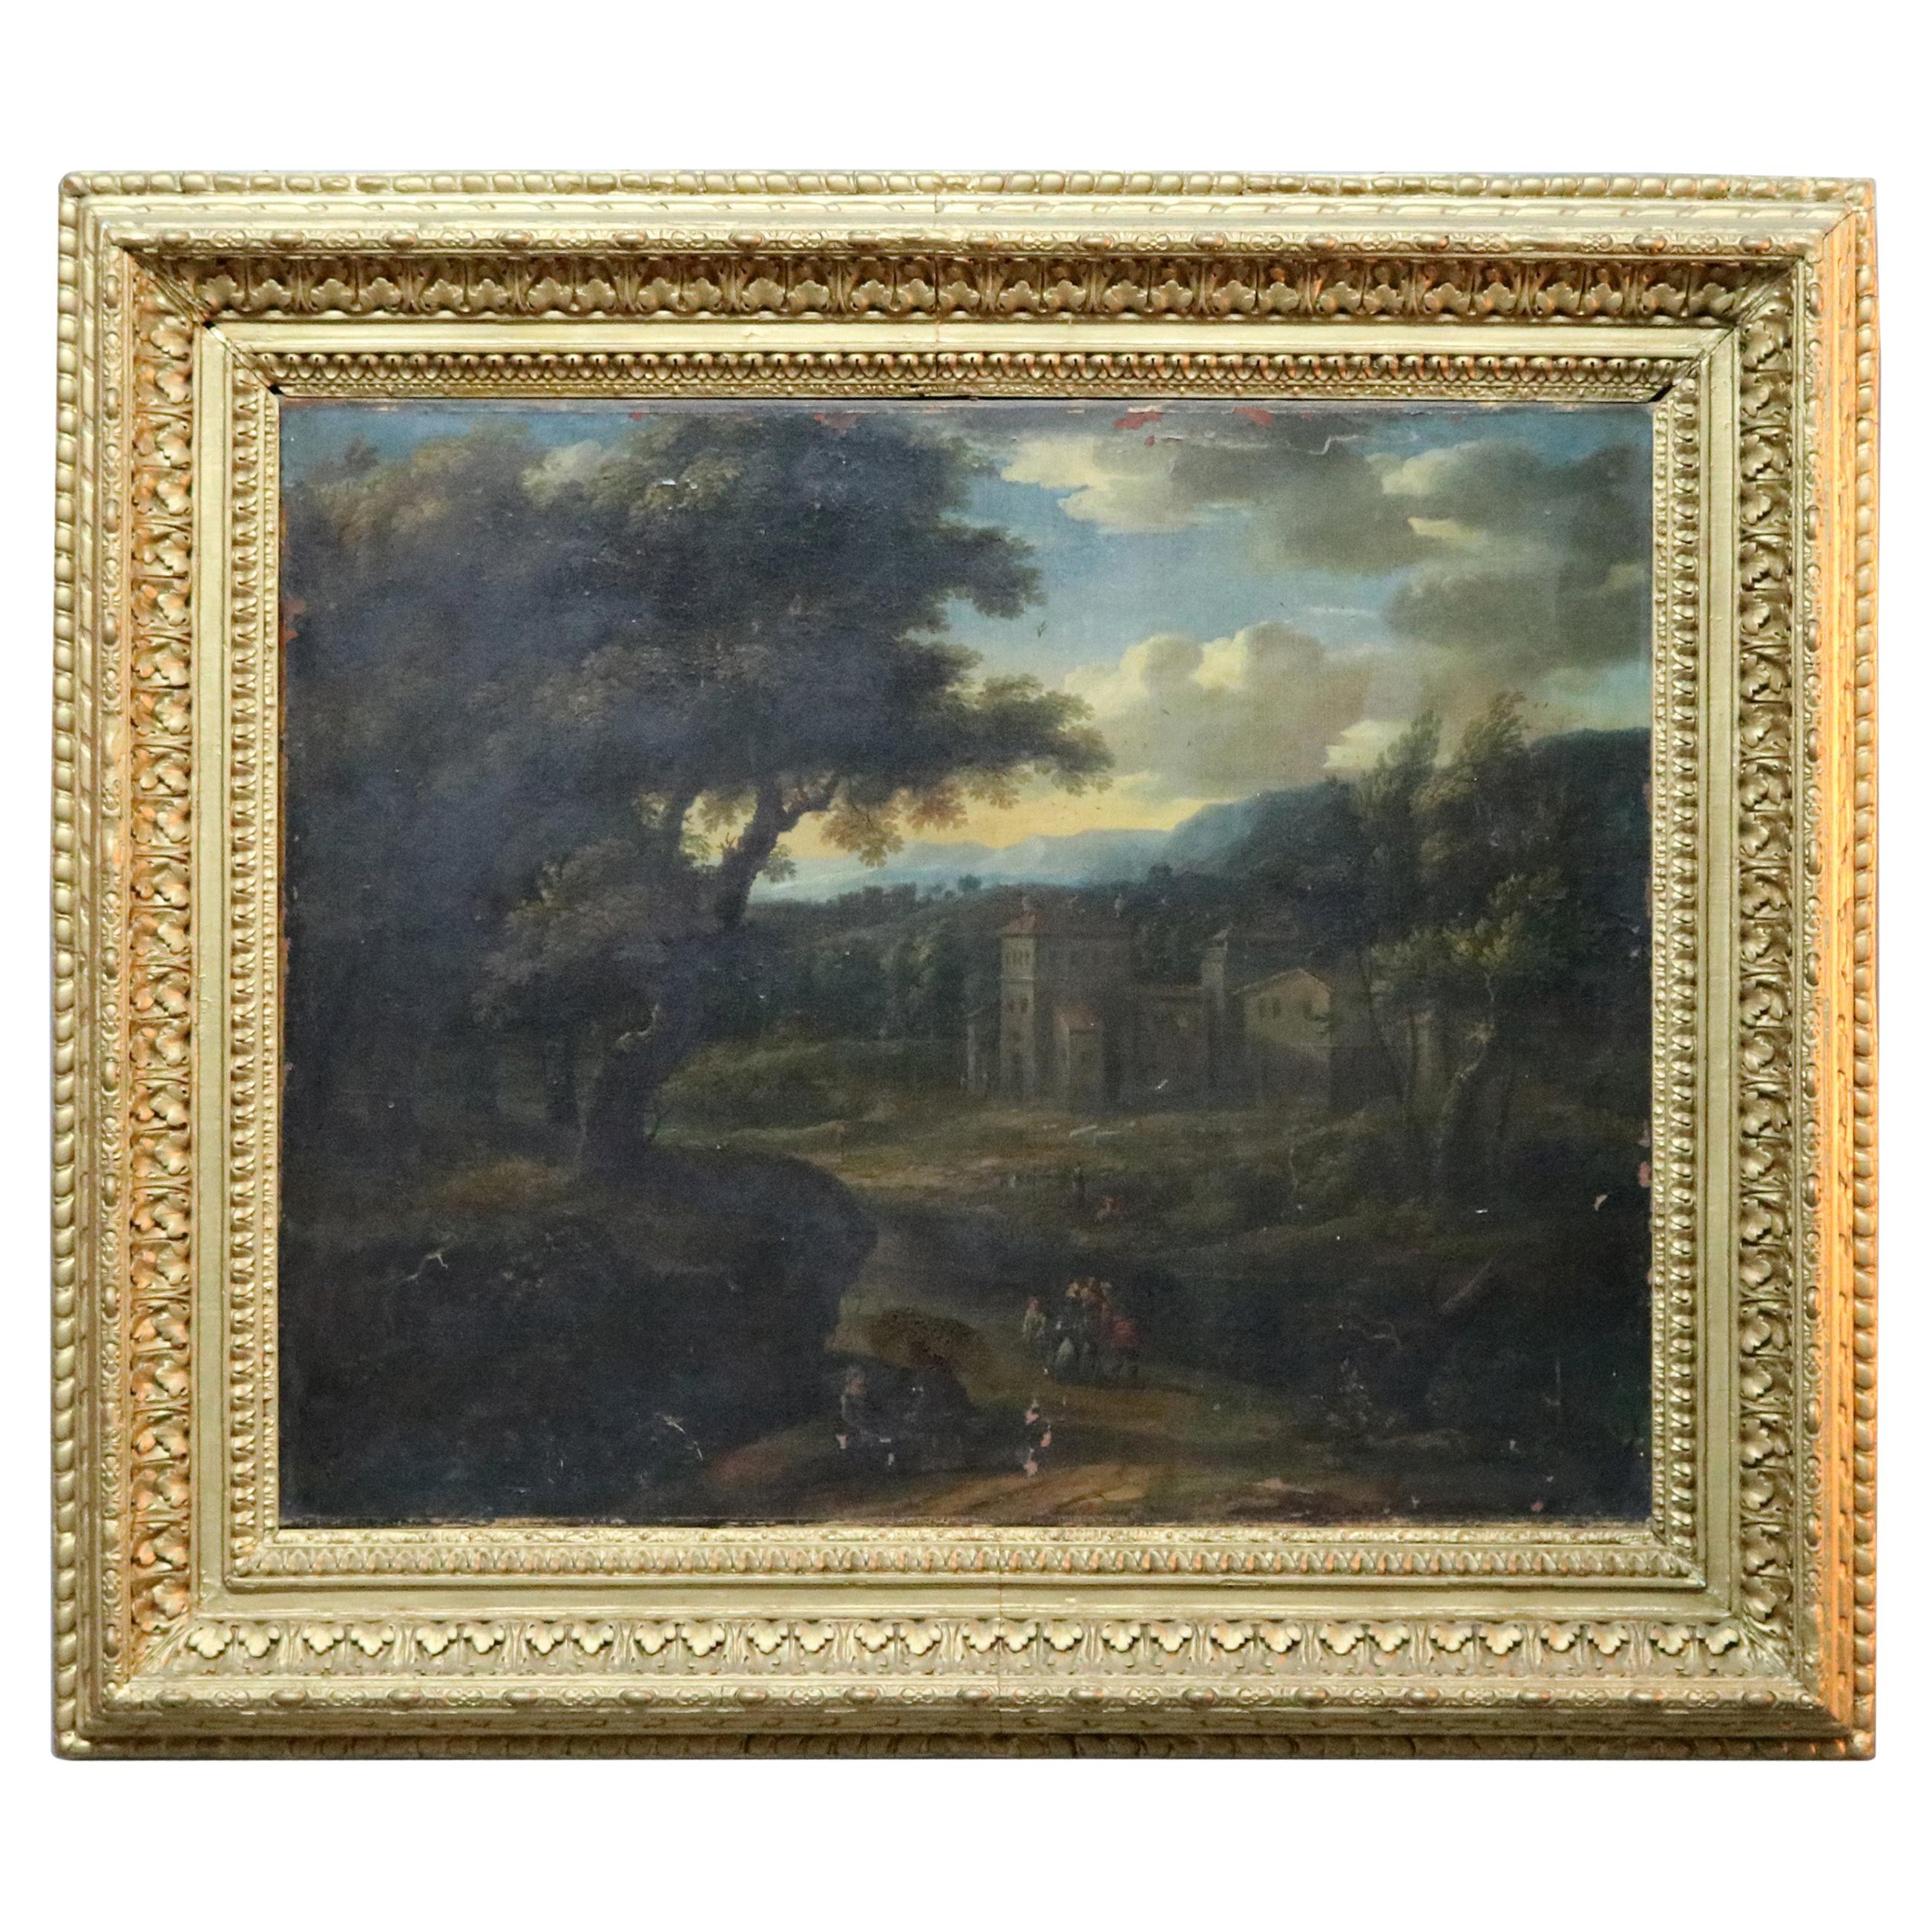 Antique Continental Oil on Canvas, Landscape Village Scene, Signed Warren, c1880